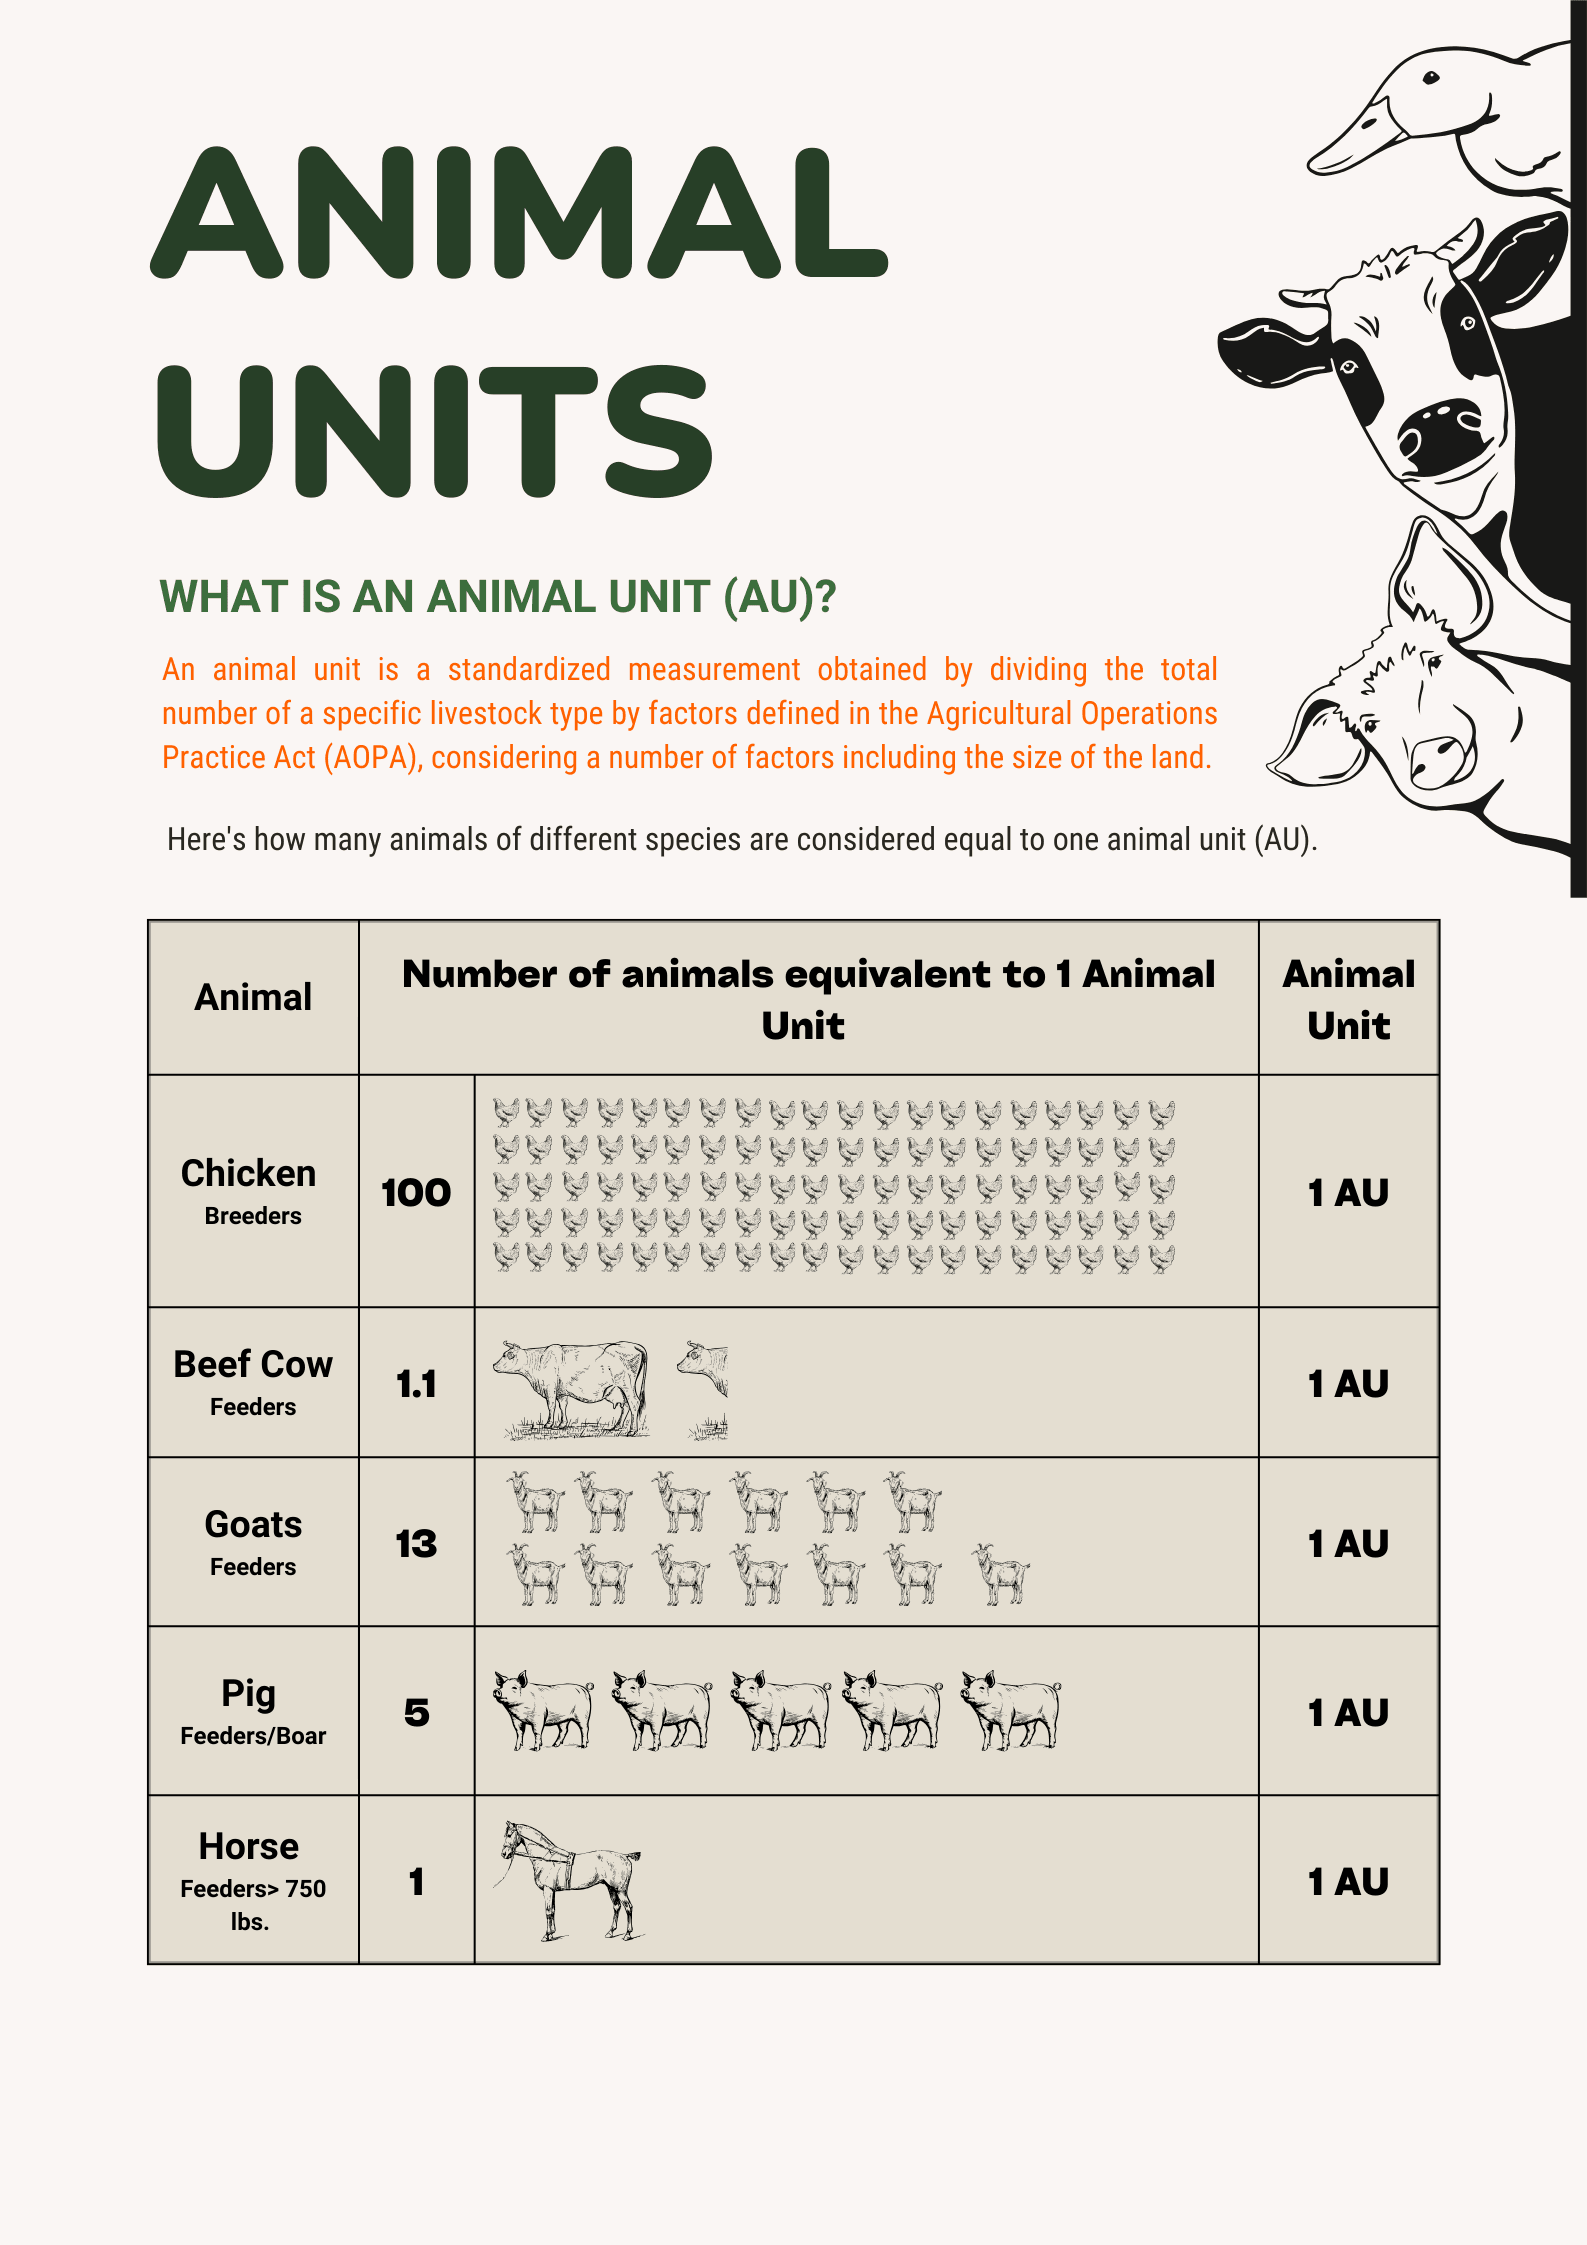 Animal Units Infographic 1